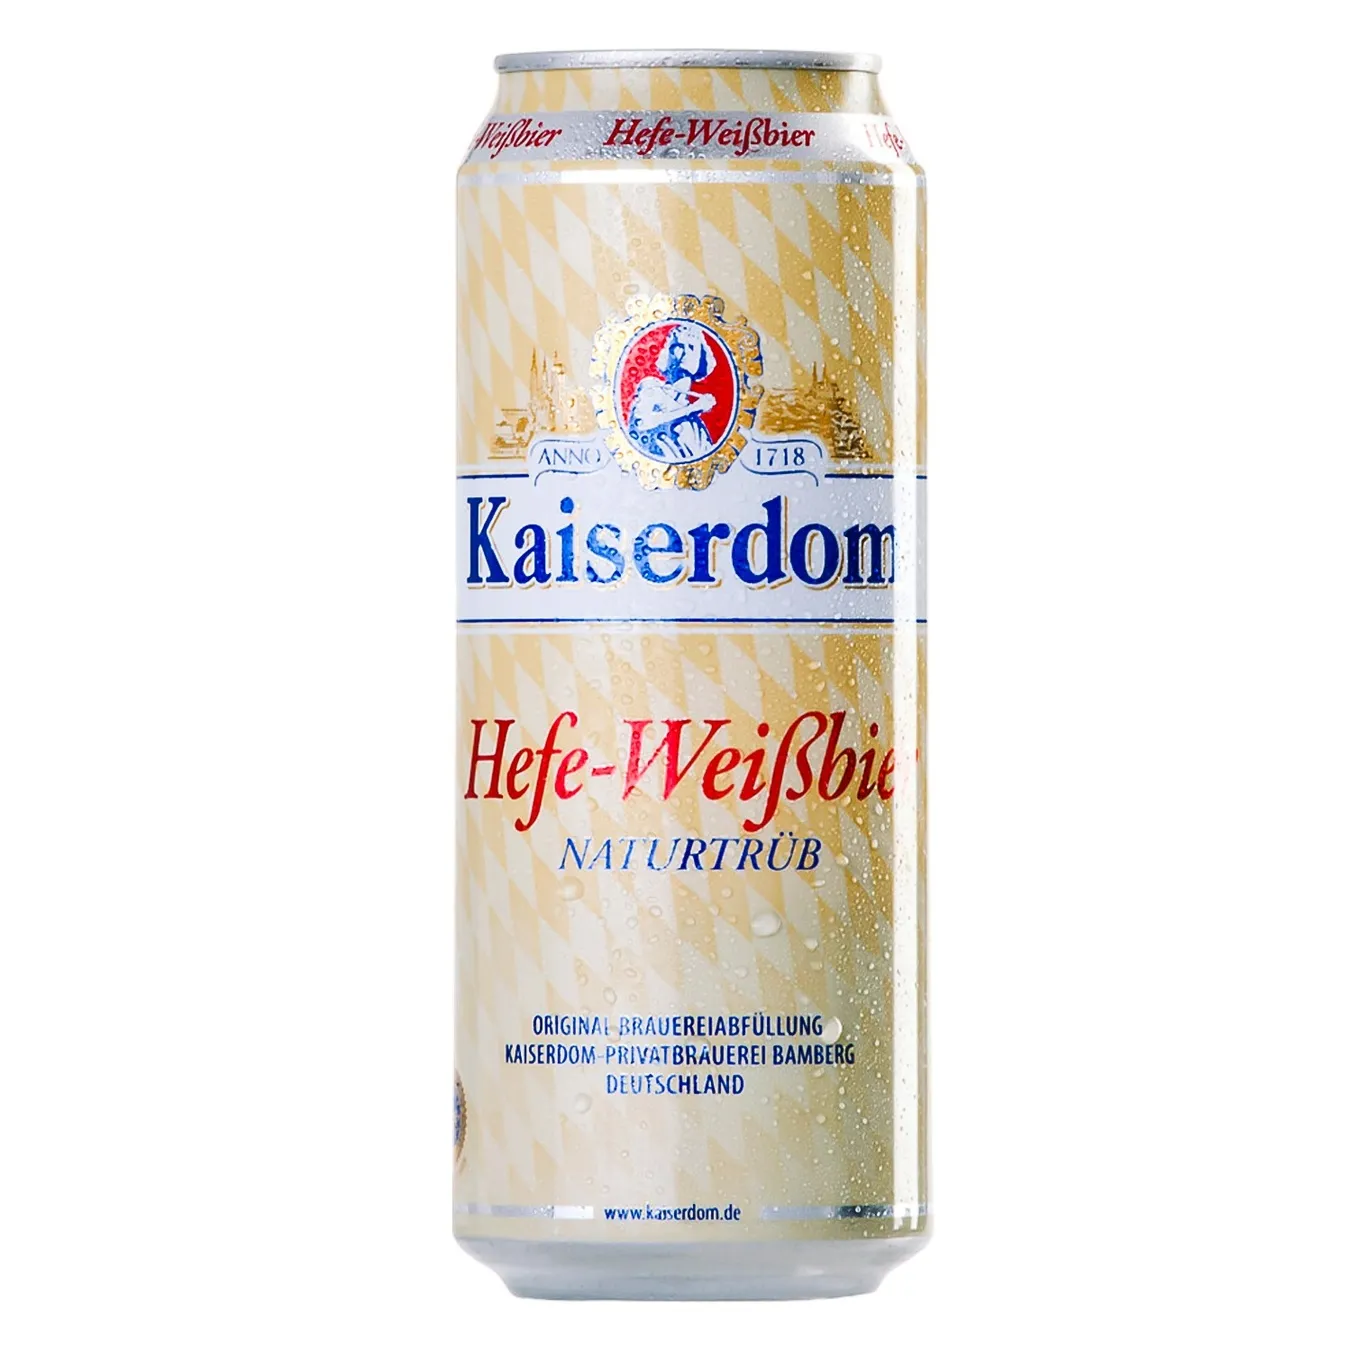 Kaiserdom Hefe-Weisbier light beer 4.7% 0.25l